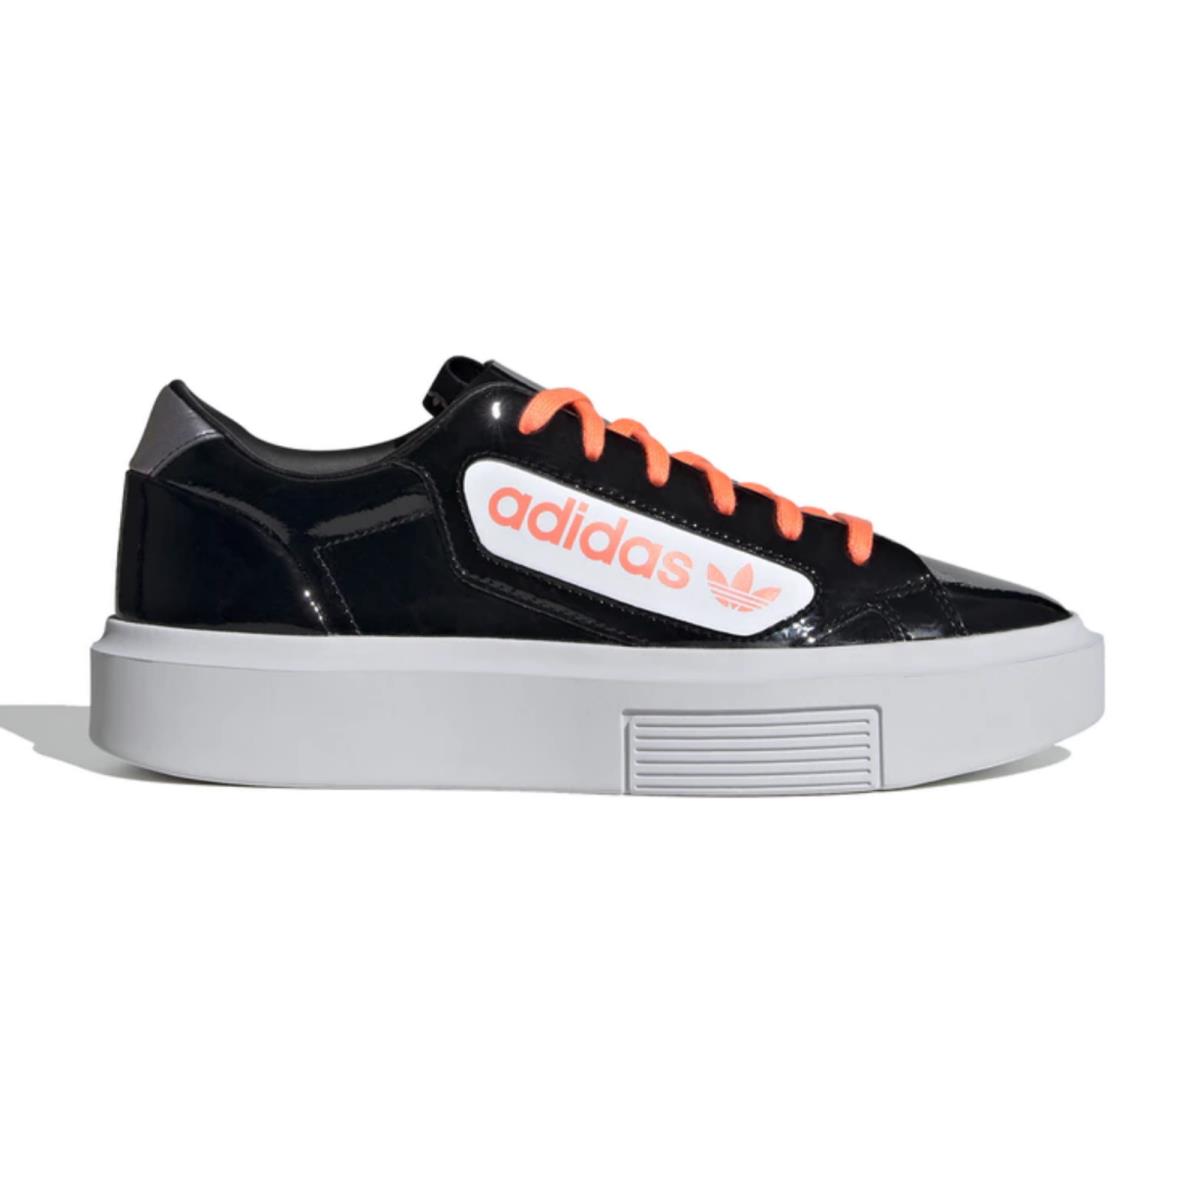 Adidas Originals Sneakers Size 6 Sleek Super W Black Coral Patent Shoes EF4954